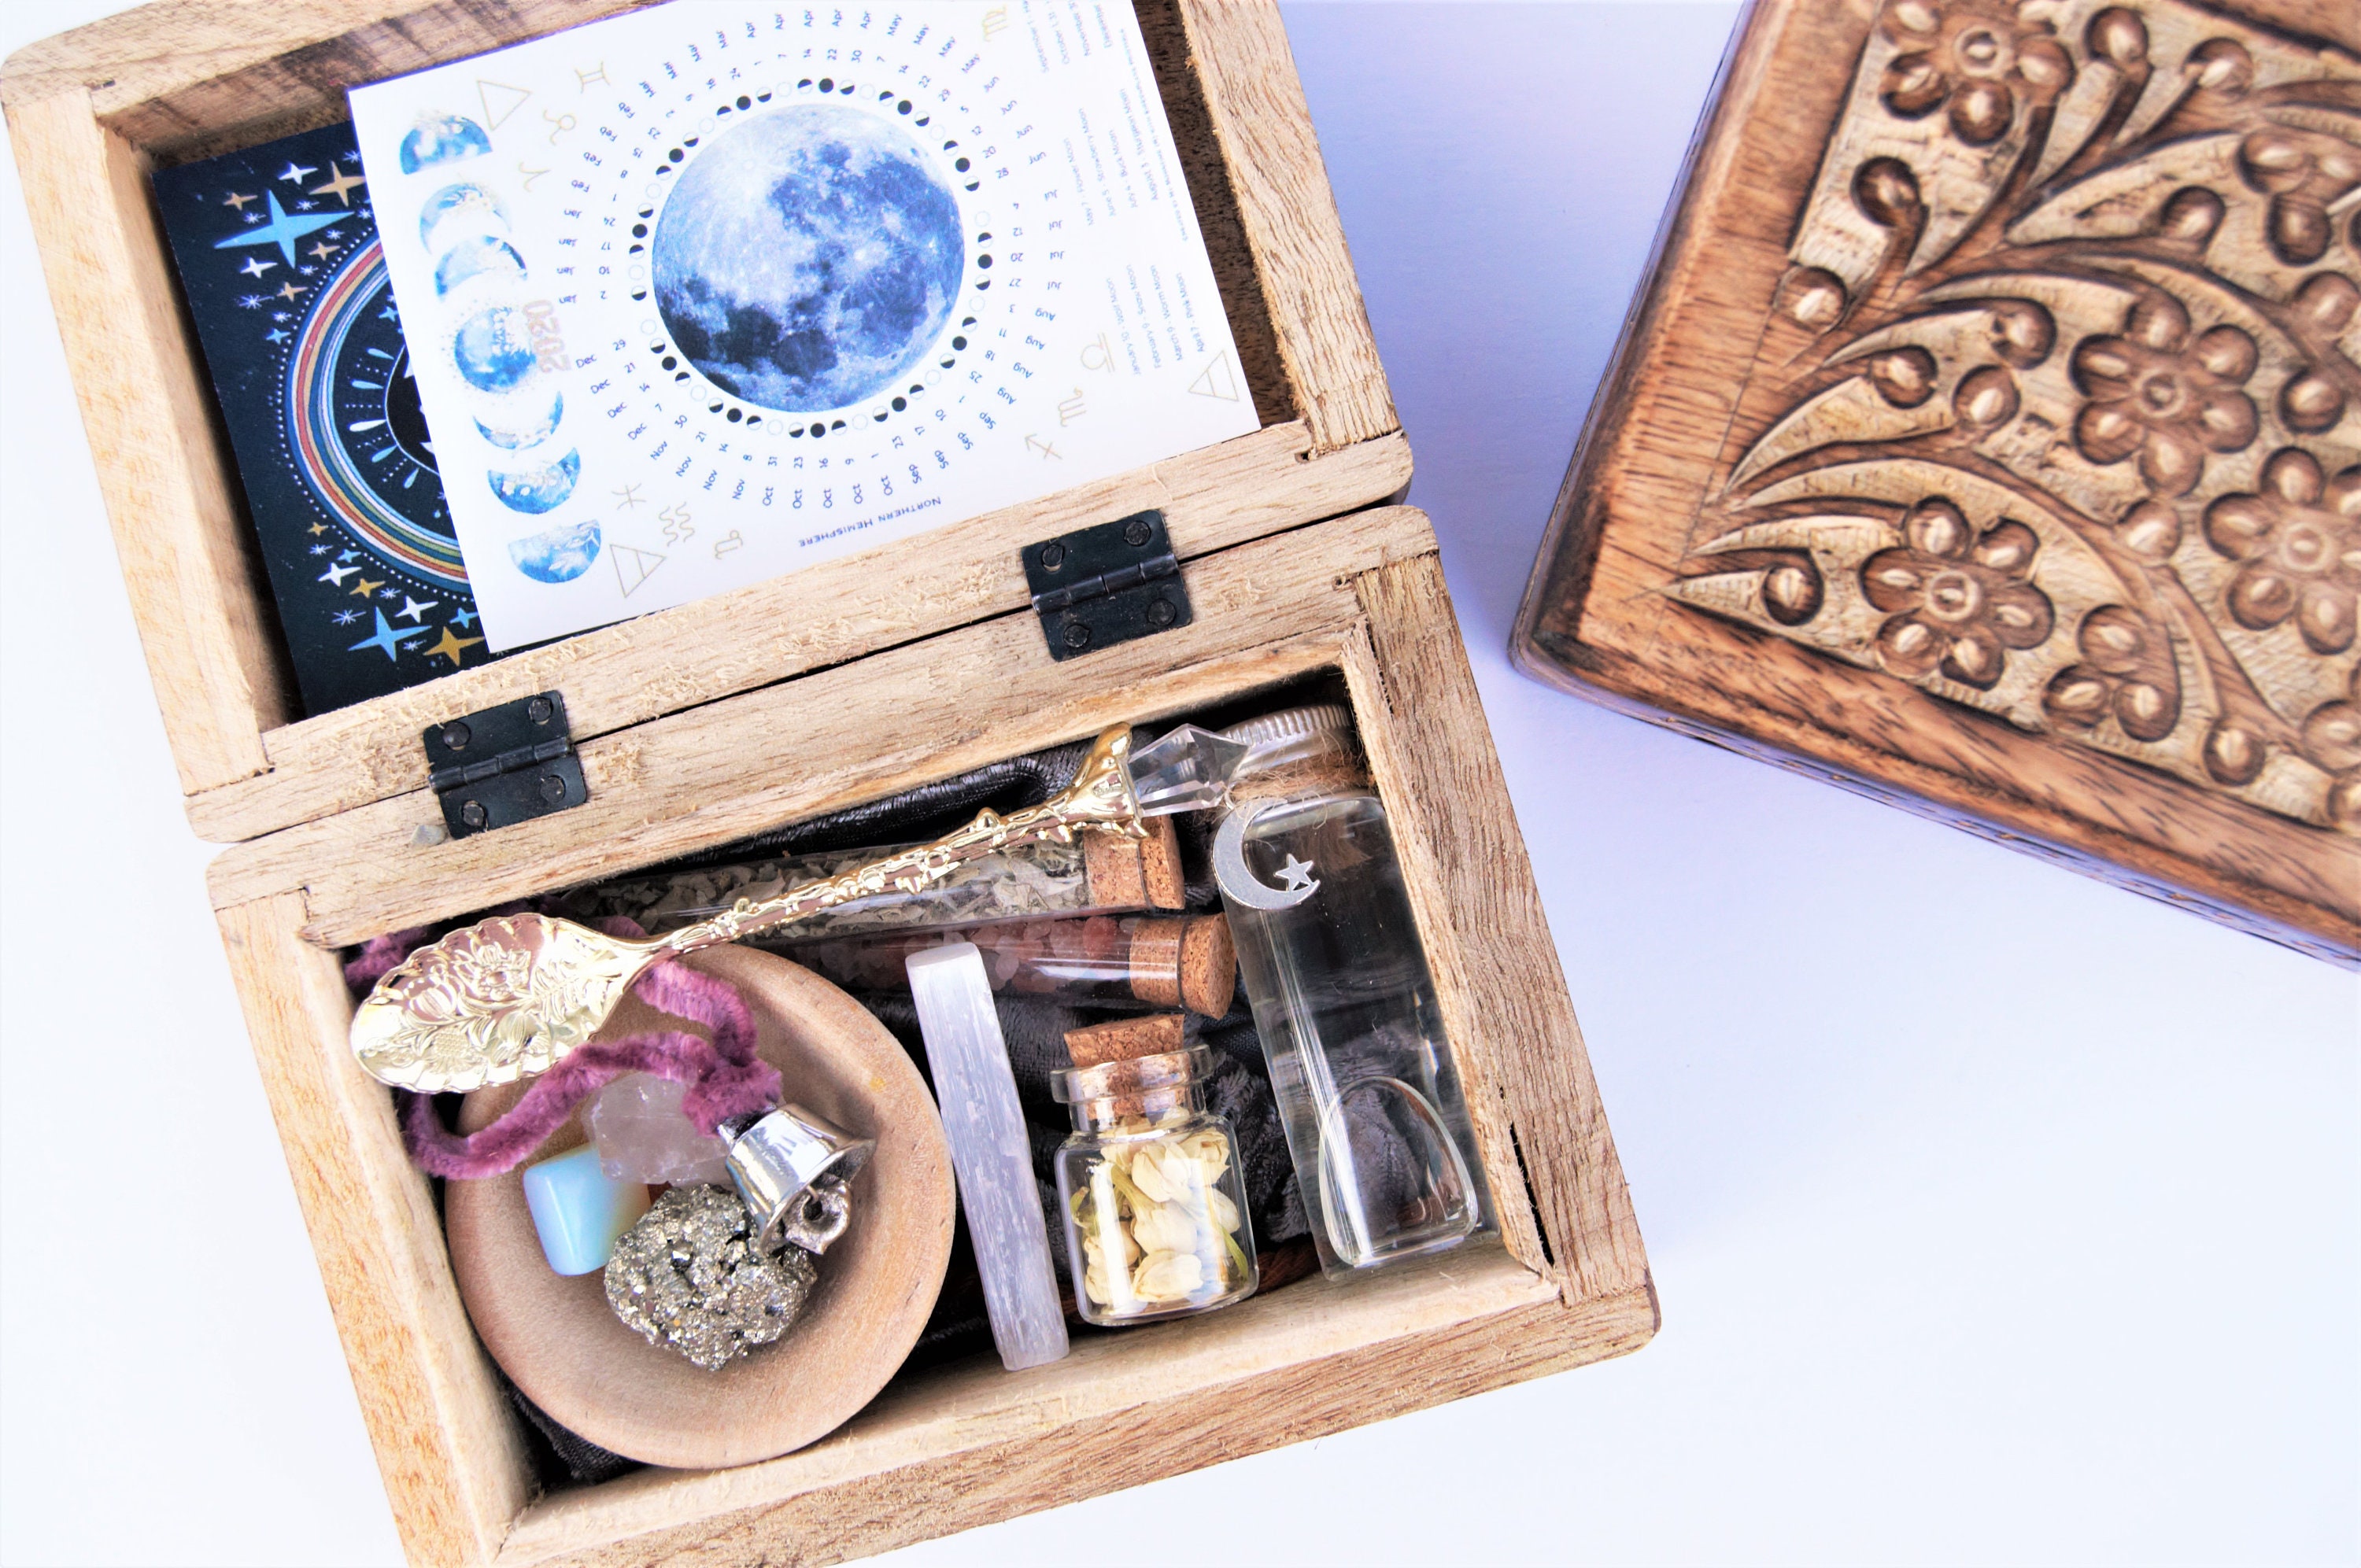 Witchcraft Supplies Box for Wiccan Spells – Craft Gossip